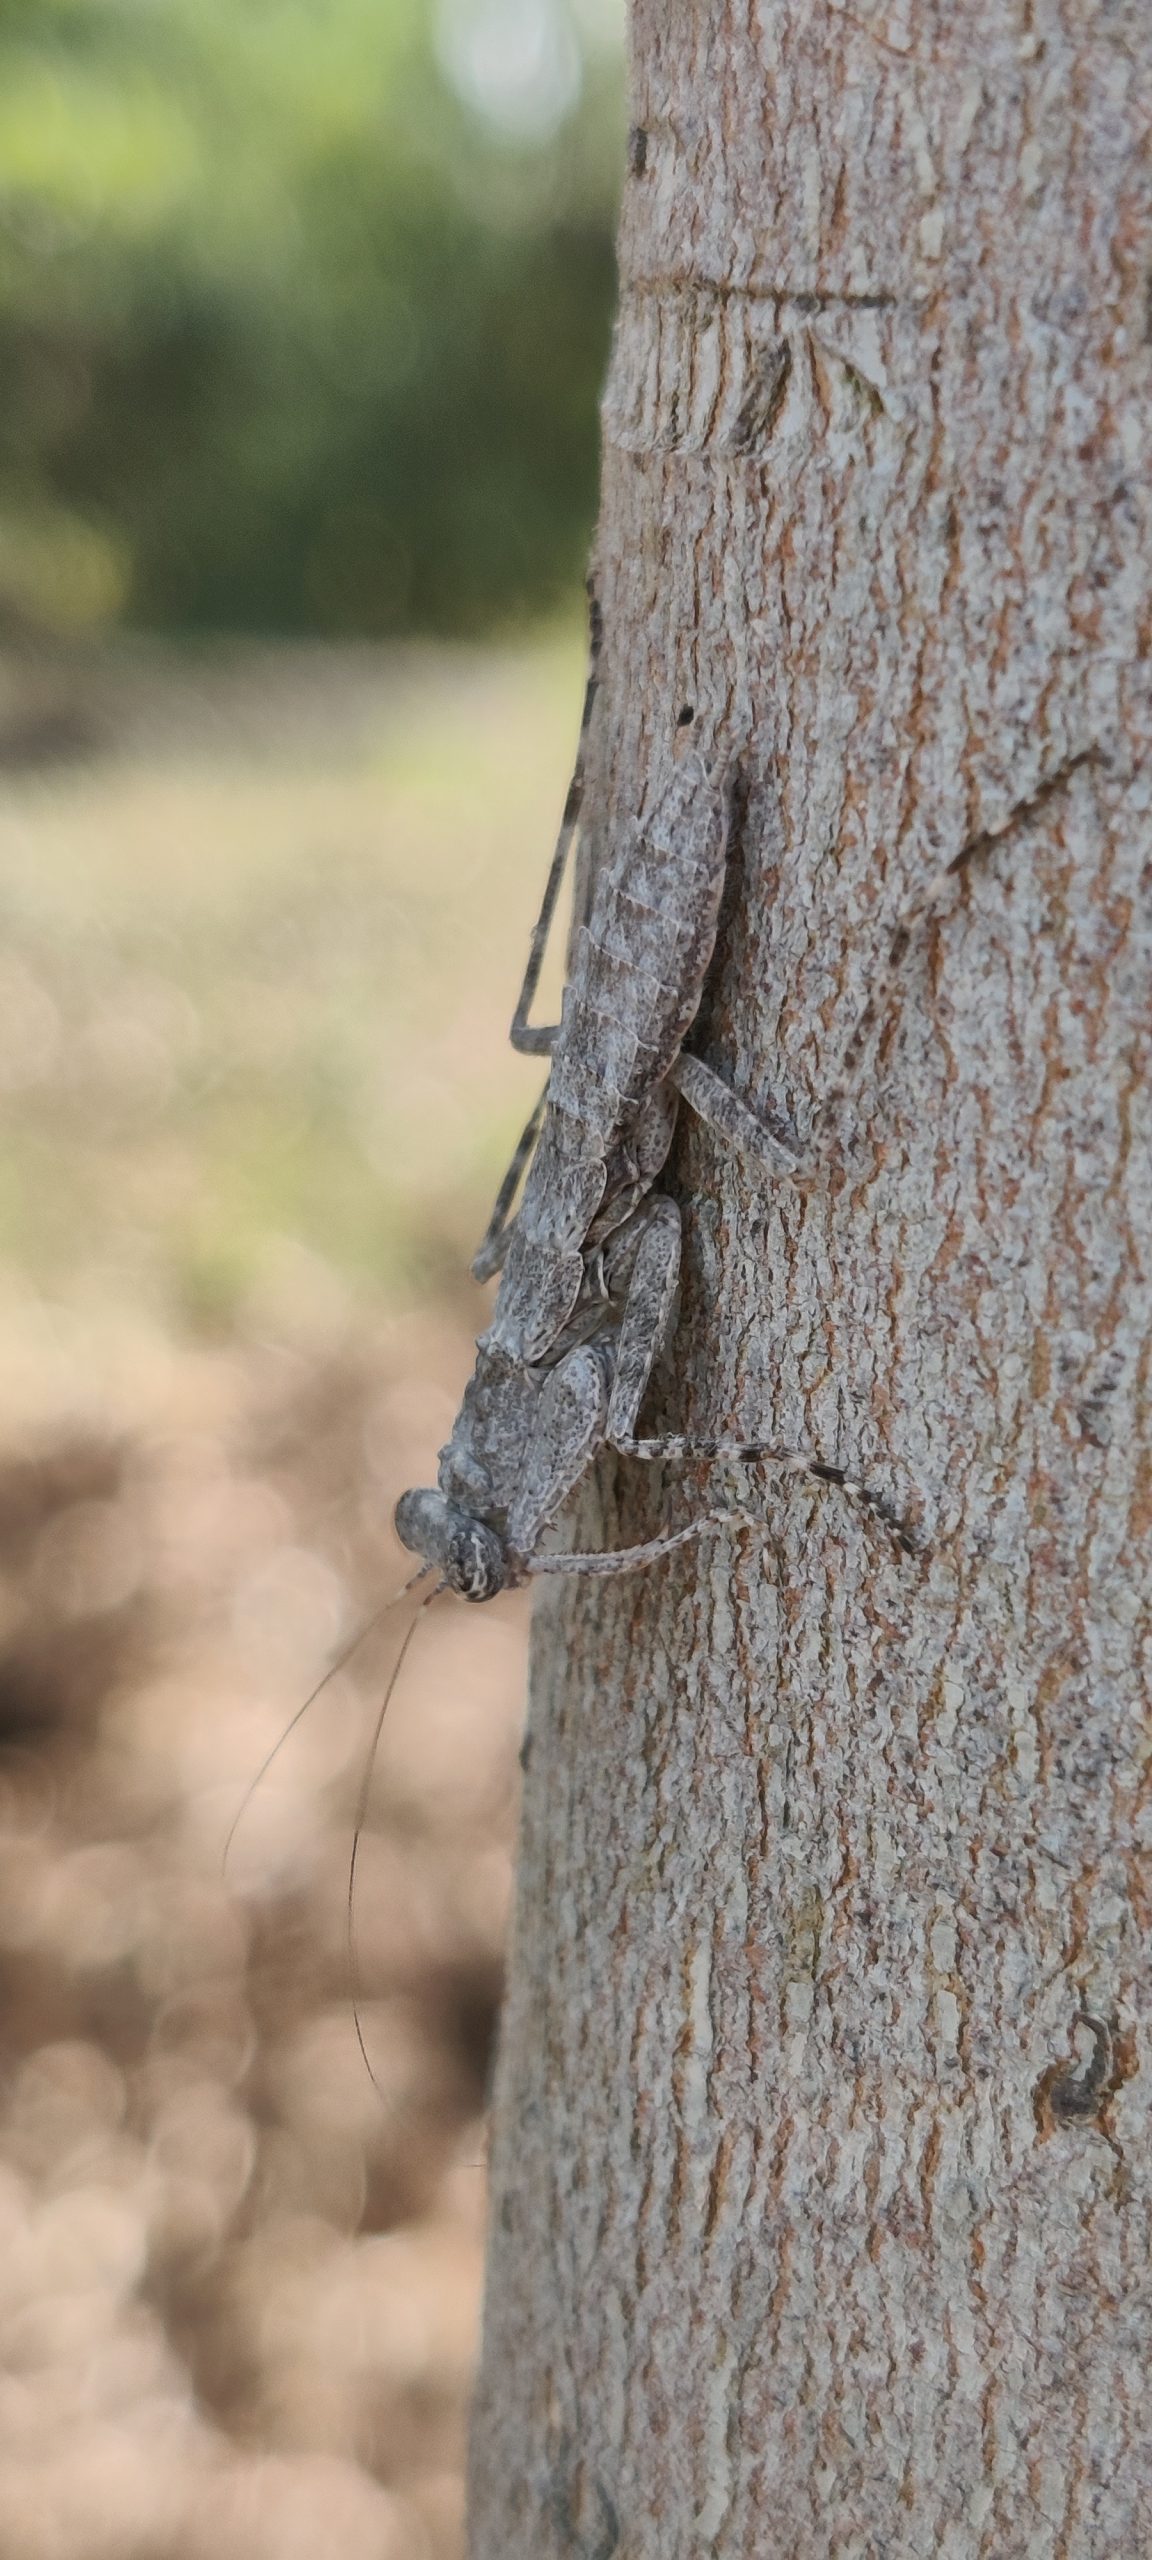 Grasshopper on the tree trunk